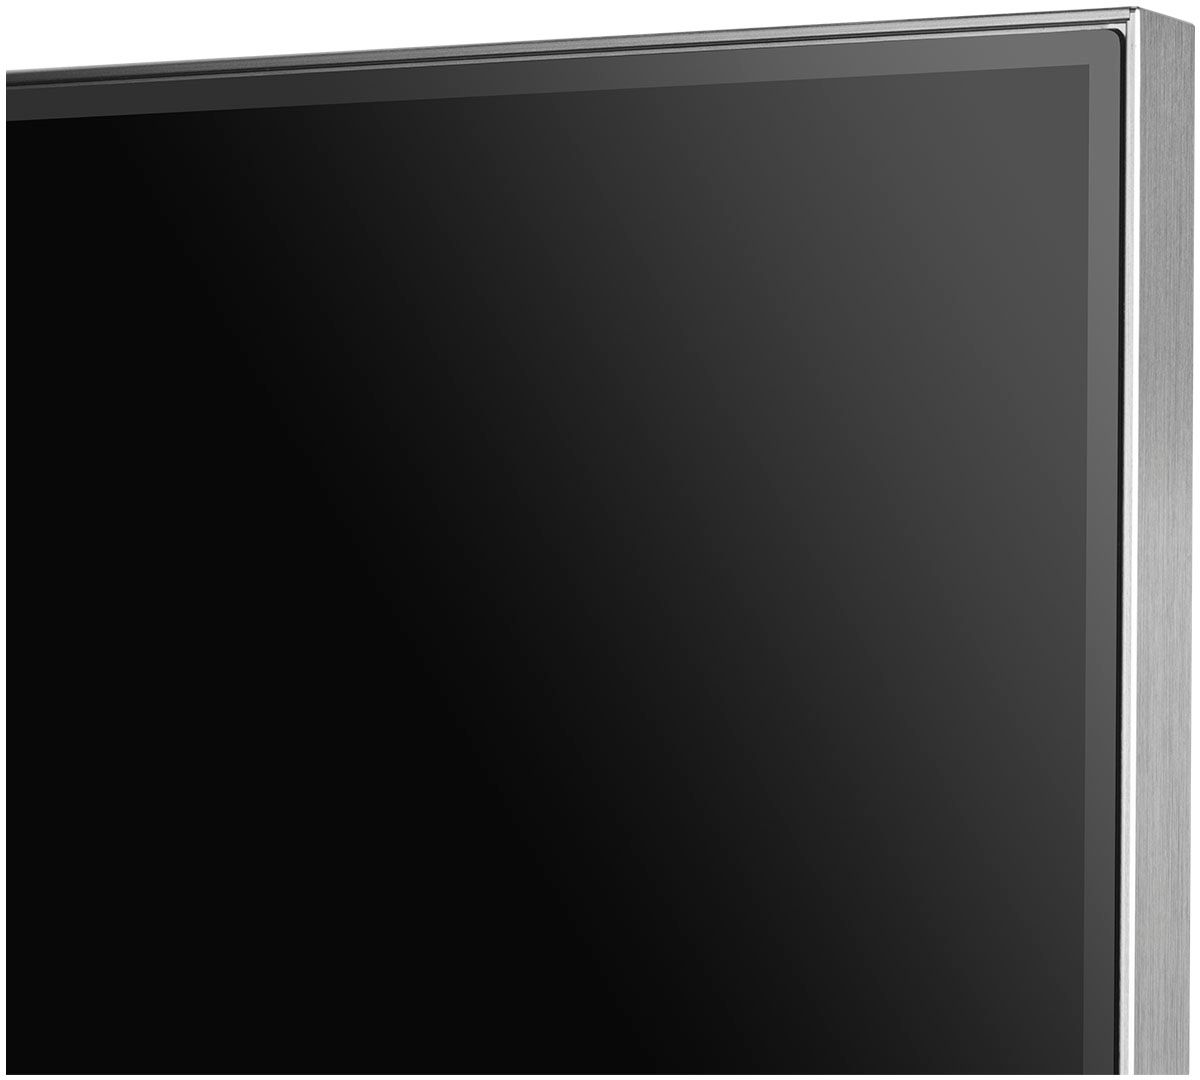 Best 6-Series TCL 4K Mini-LED Roku 55” TV HDR UHD Smart Dolby QLED Class Vision Buy: 55R635